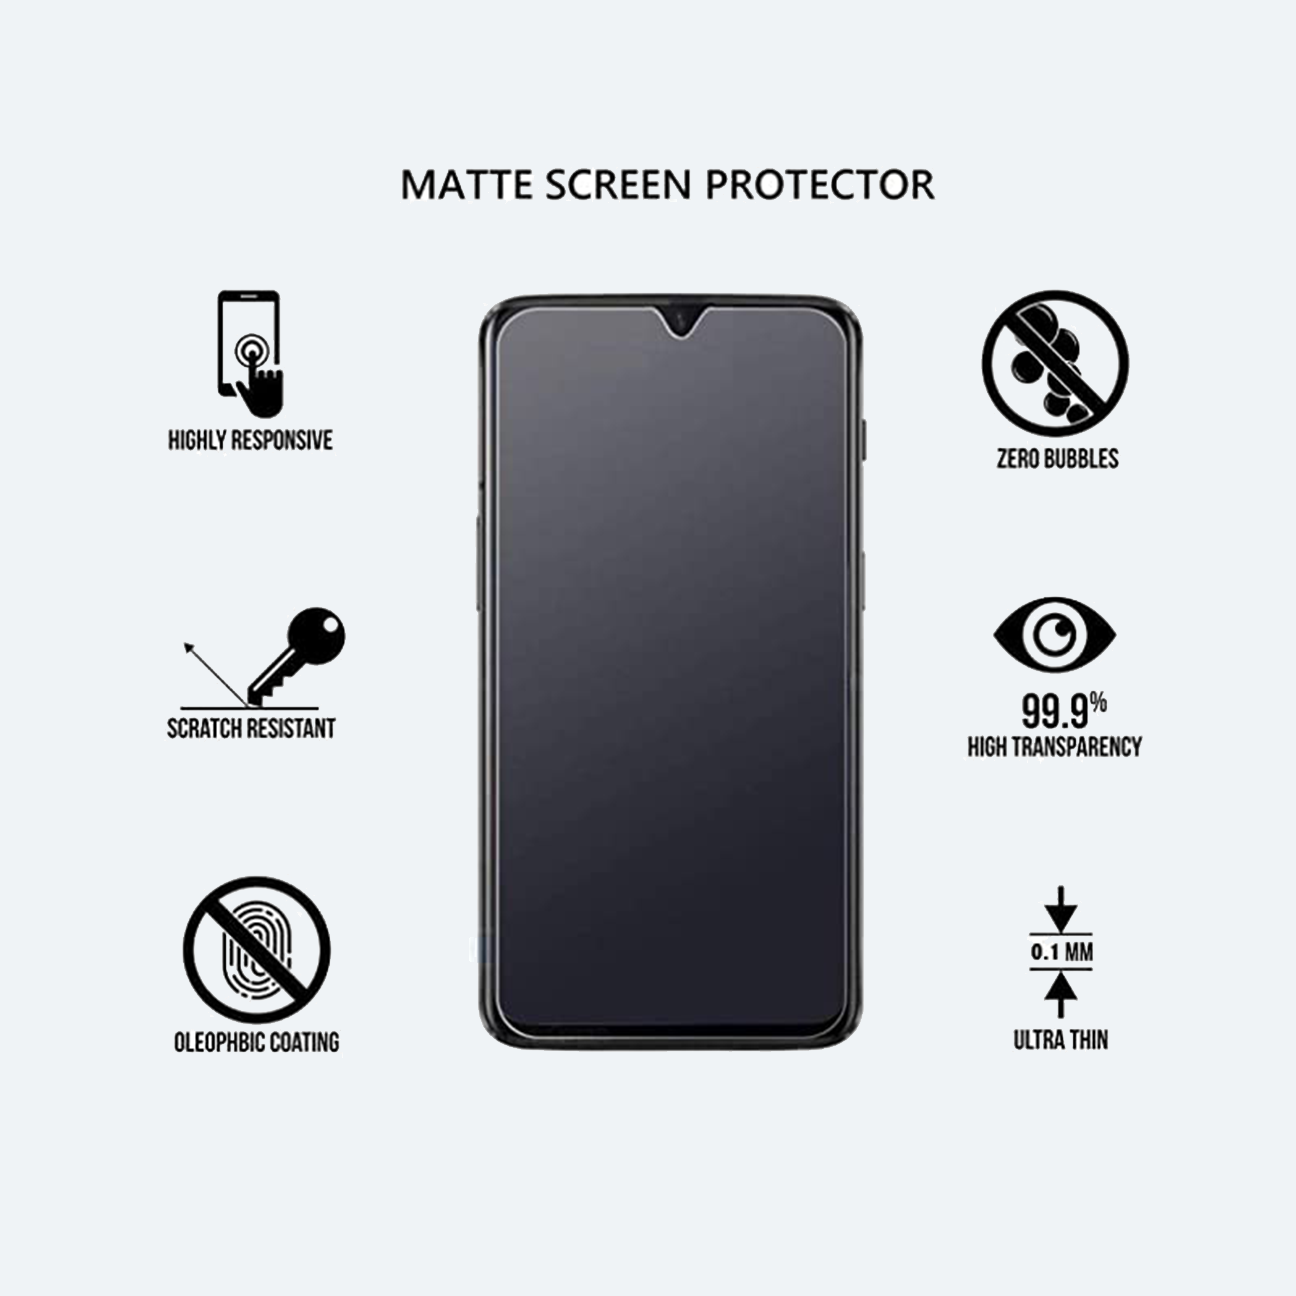 IPhone 5 Matte Unbreakable Glass